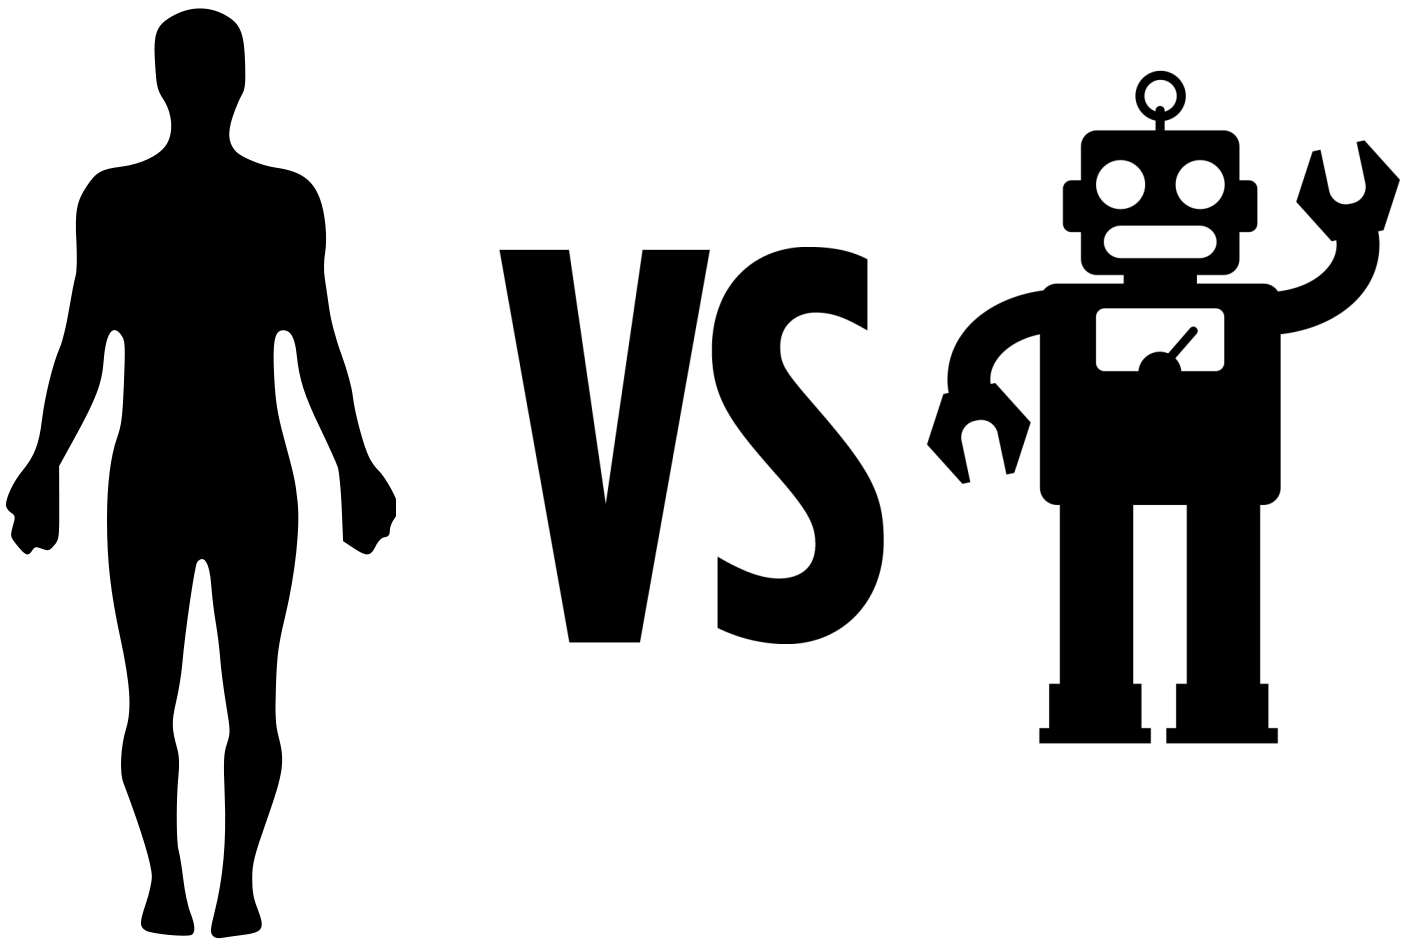 _images/humans-vs-robots.png